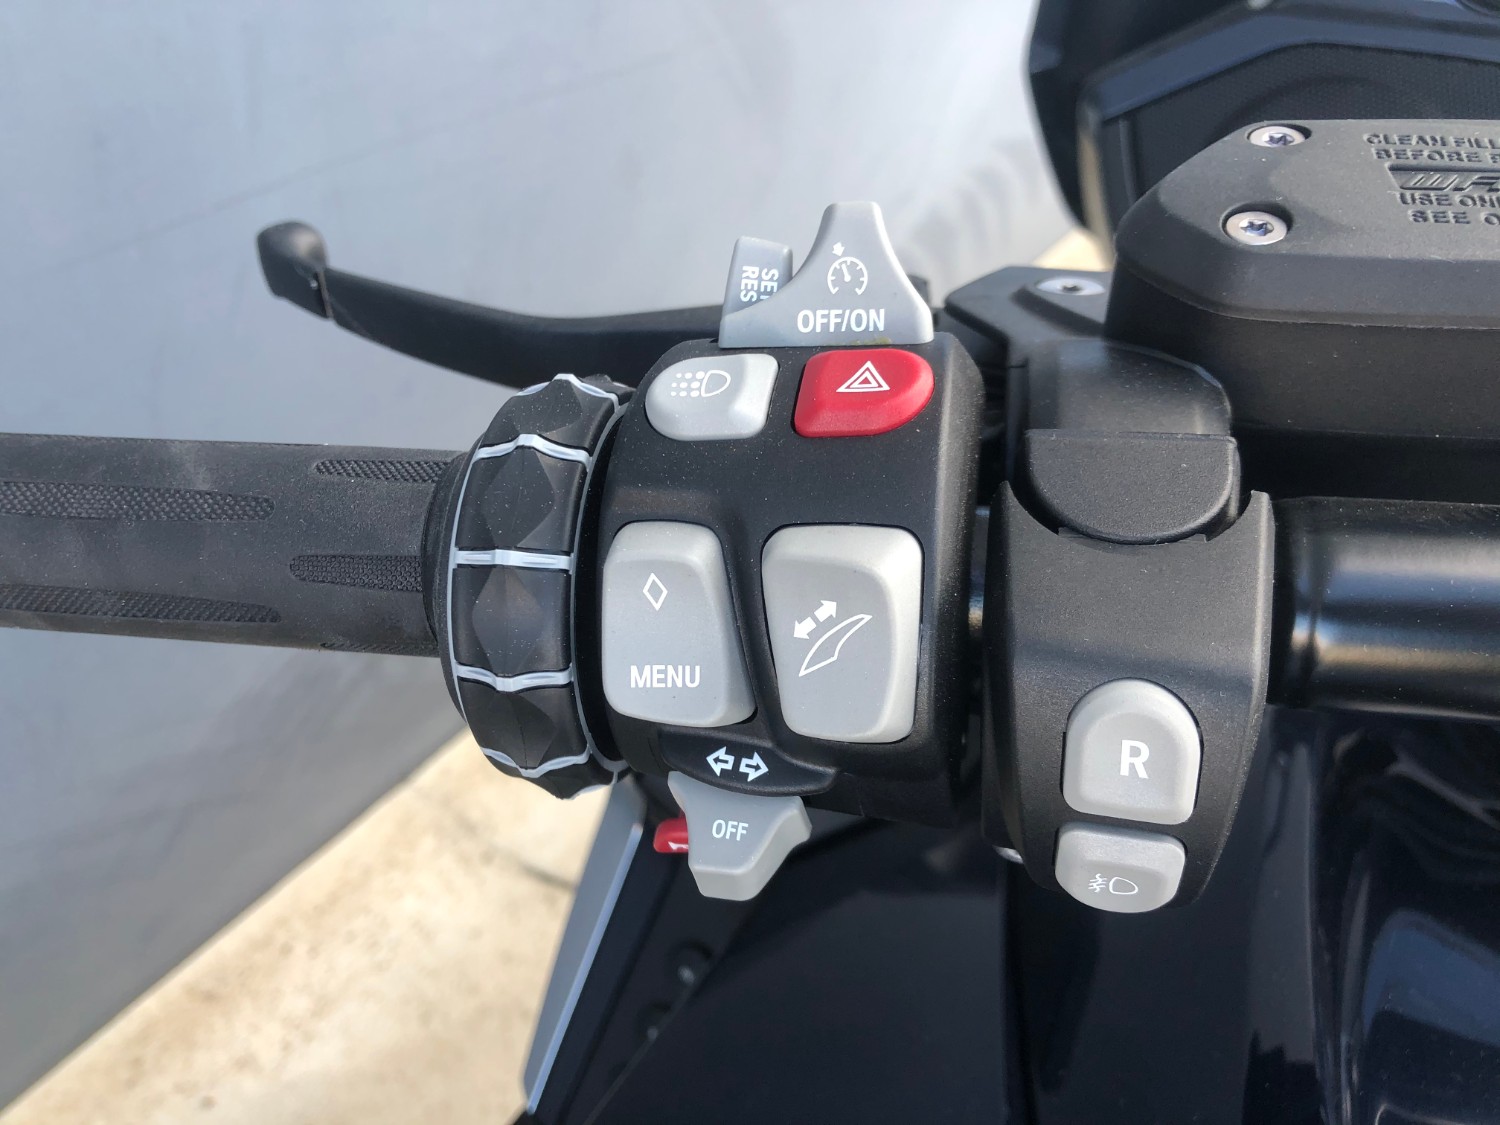 2019 BMW K1600 B Deluxe Motorcycle Image 32